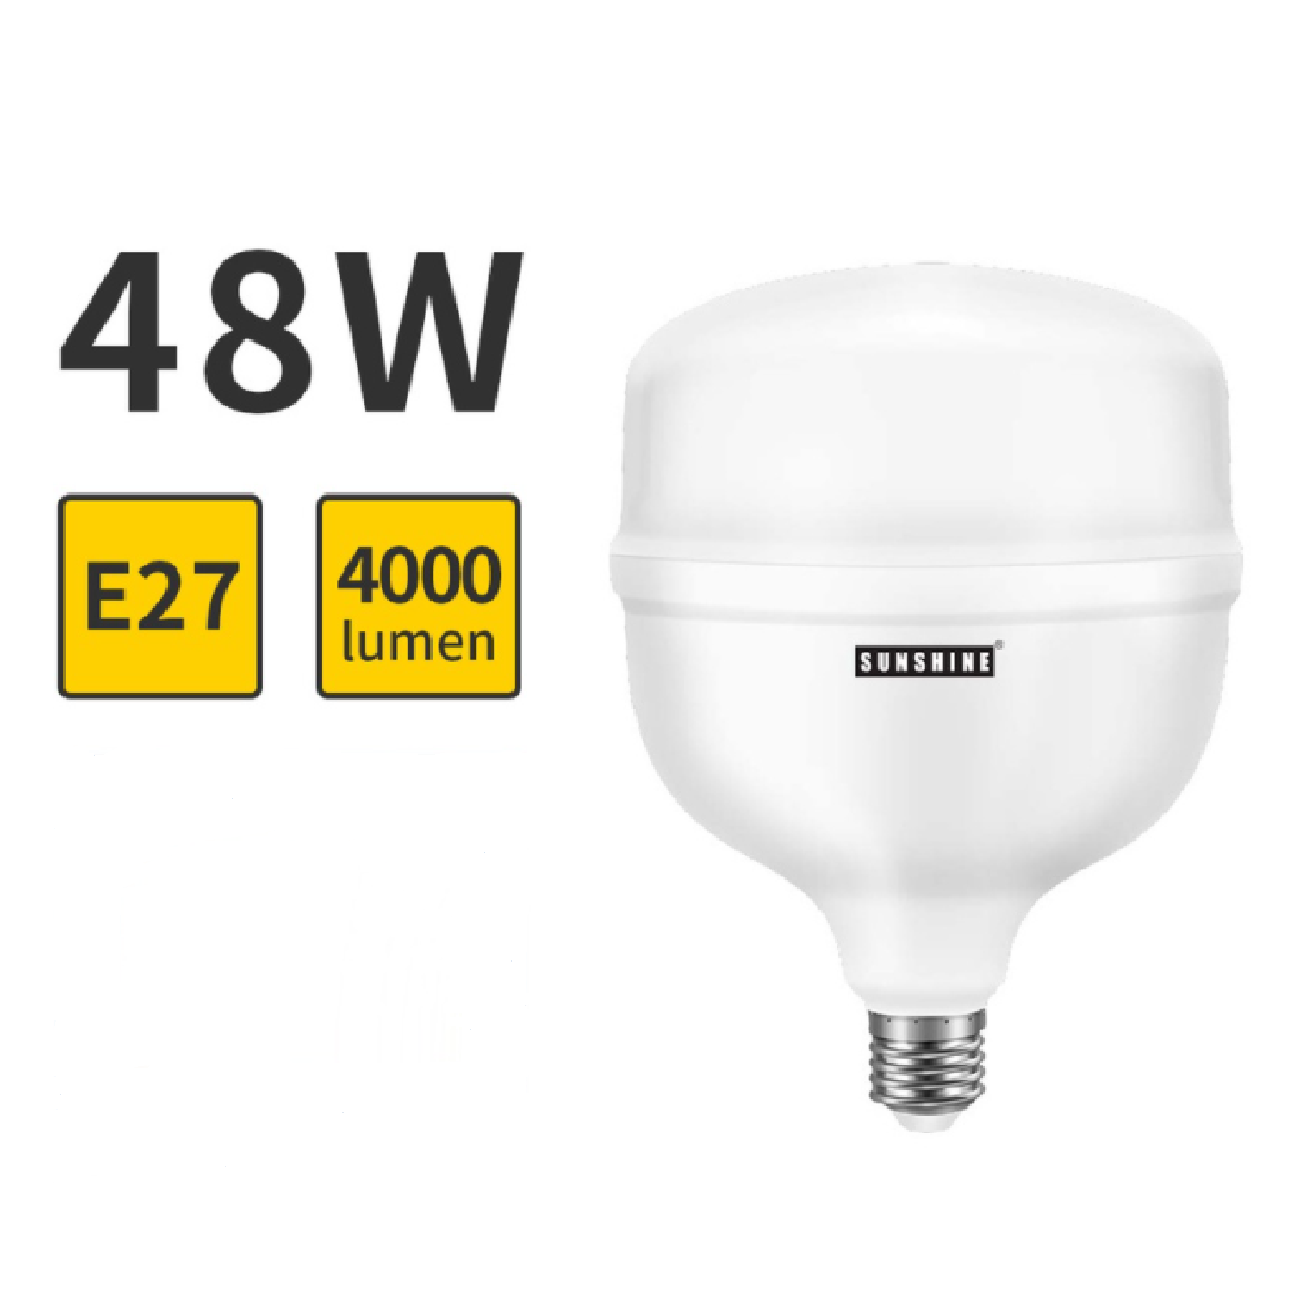 Sunshine 48W LED High Power Light Bulb (Up To 4000 Lumens) E27